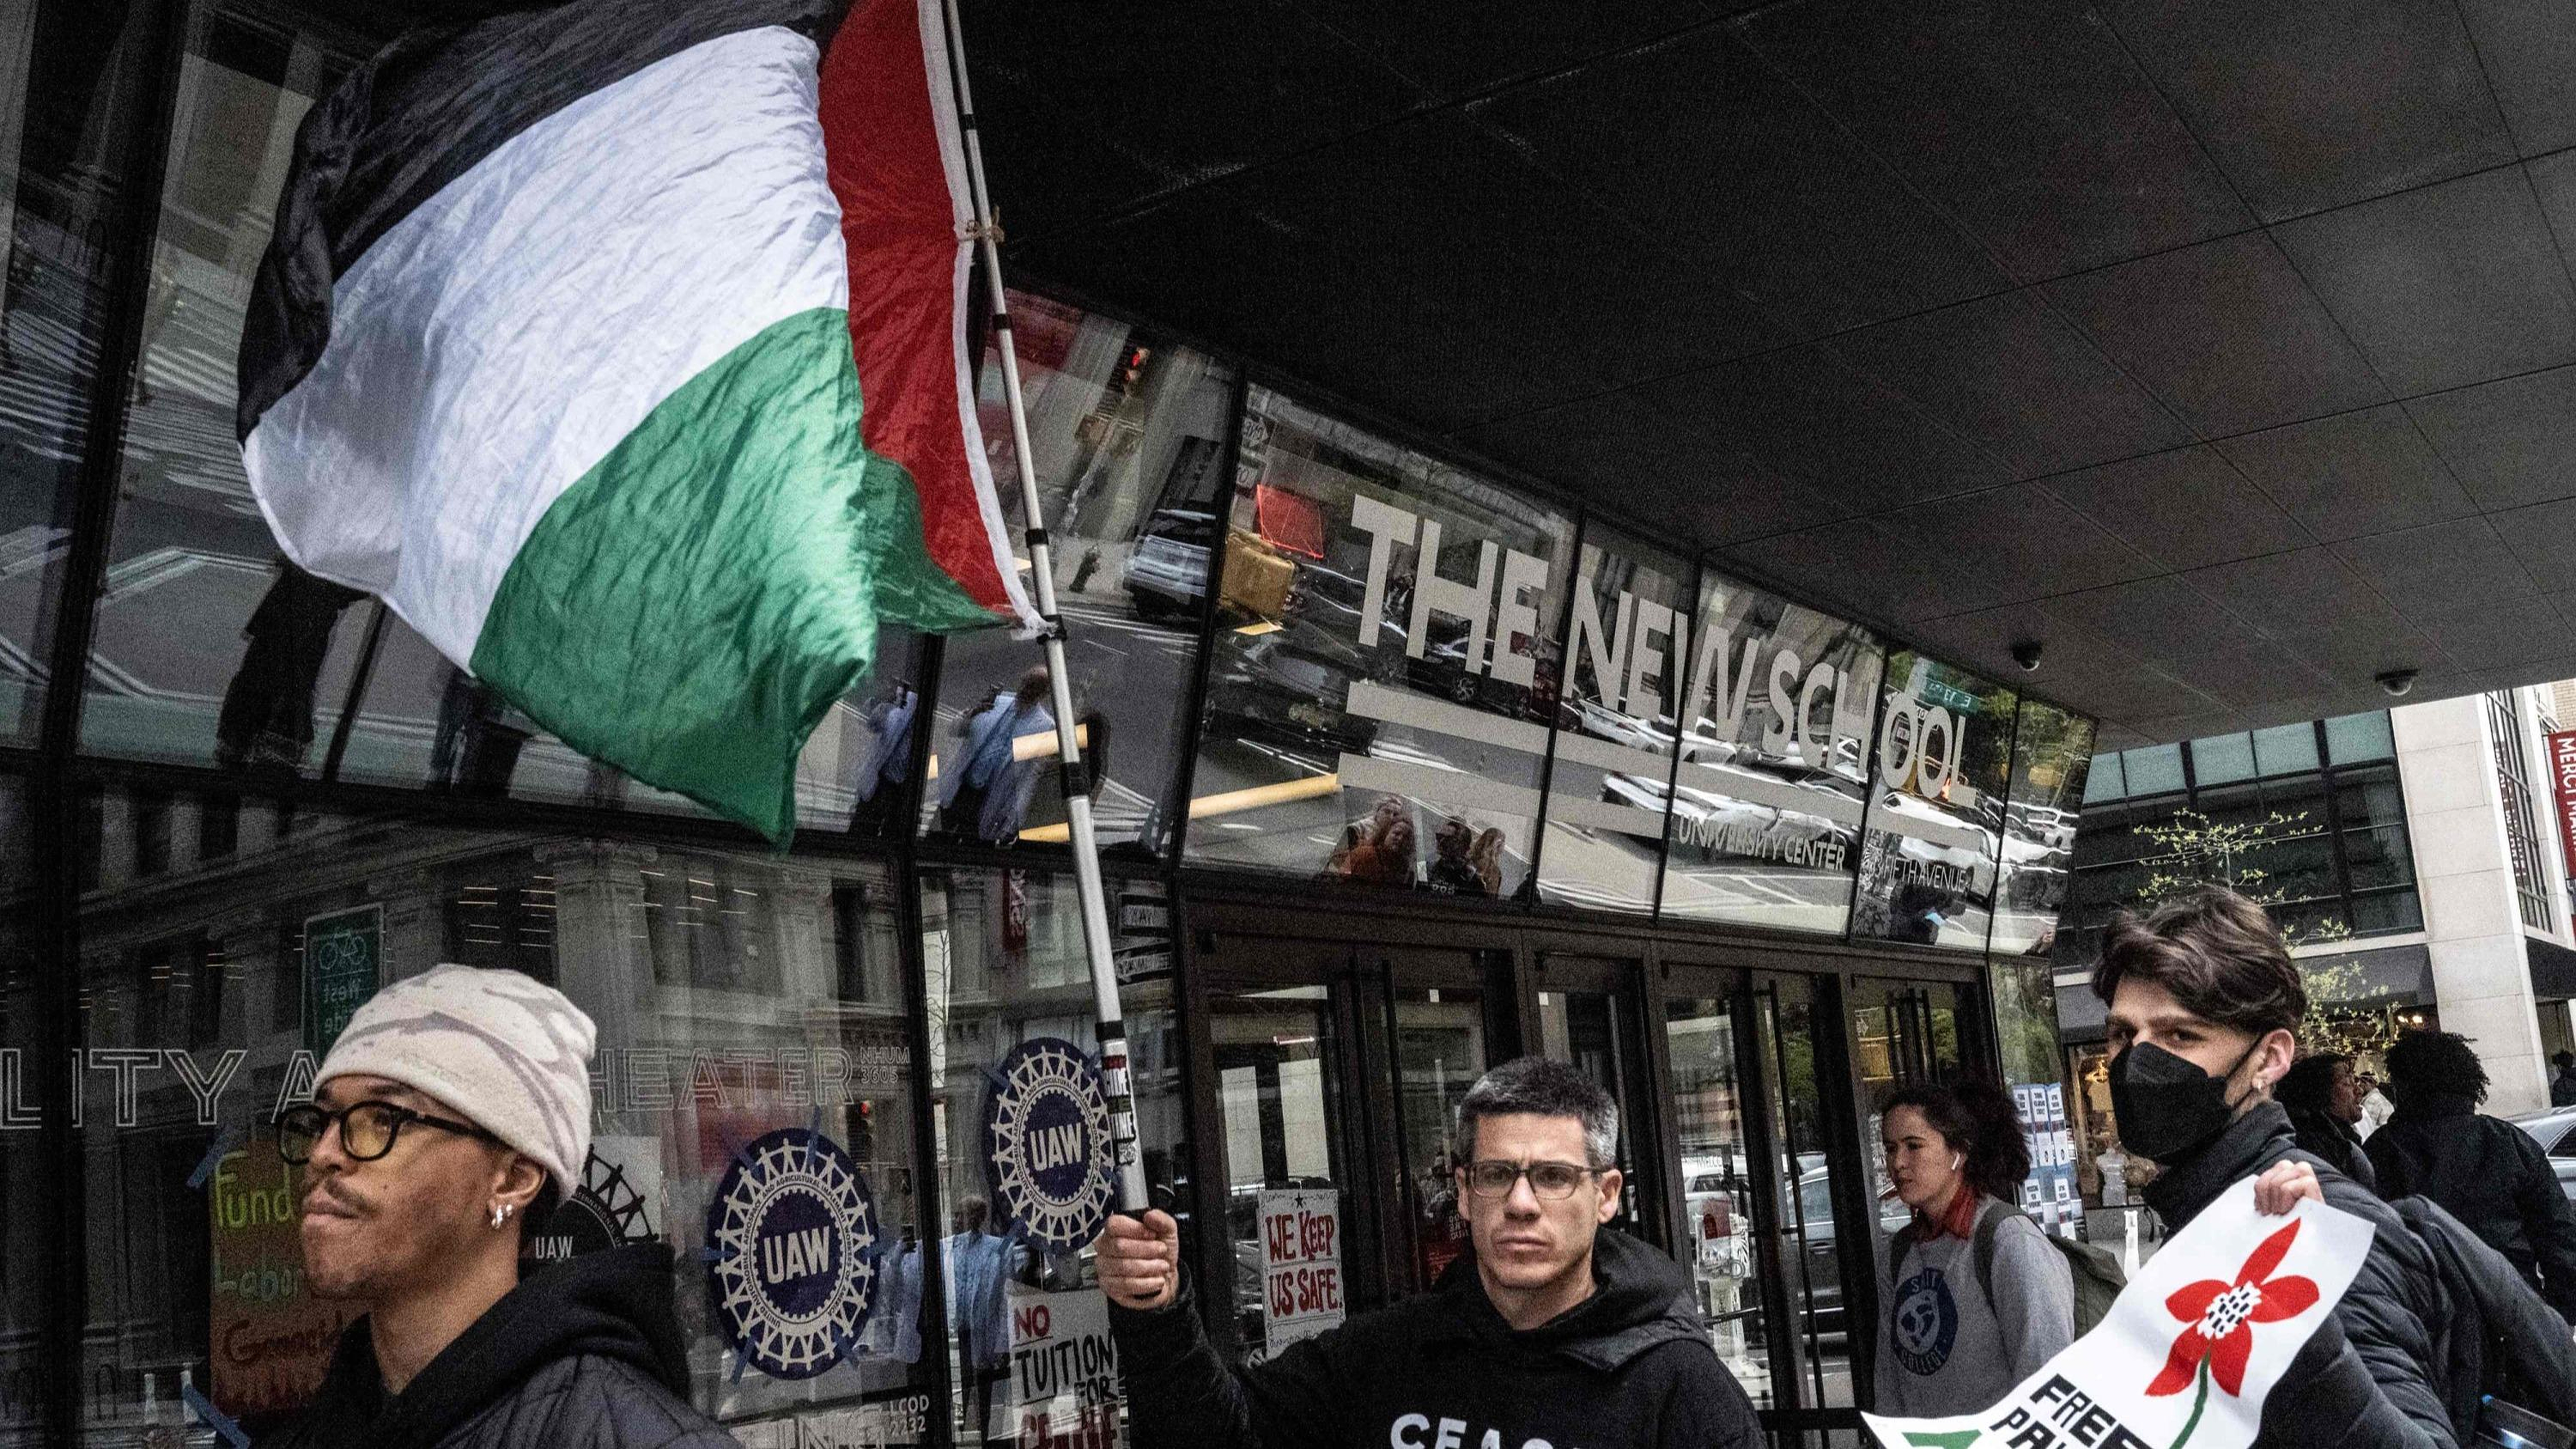 New York: at Columbia University, the anti-Semitic drift of pro-Palestinian demonstrations